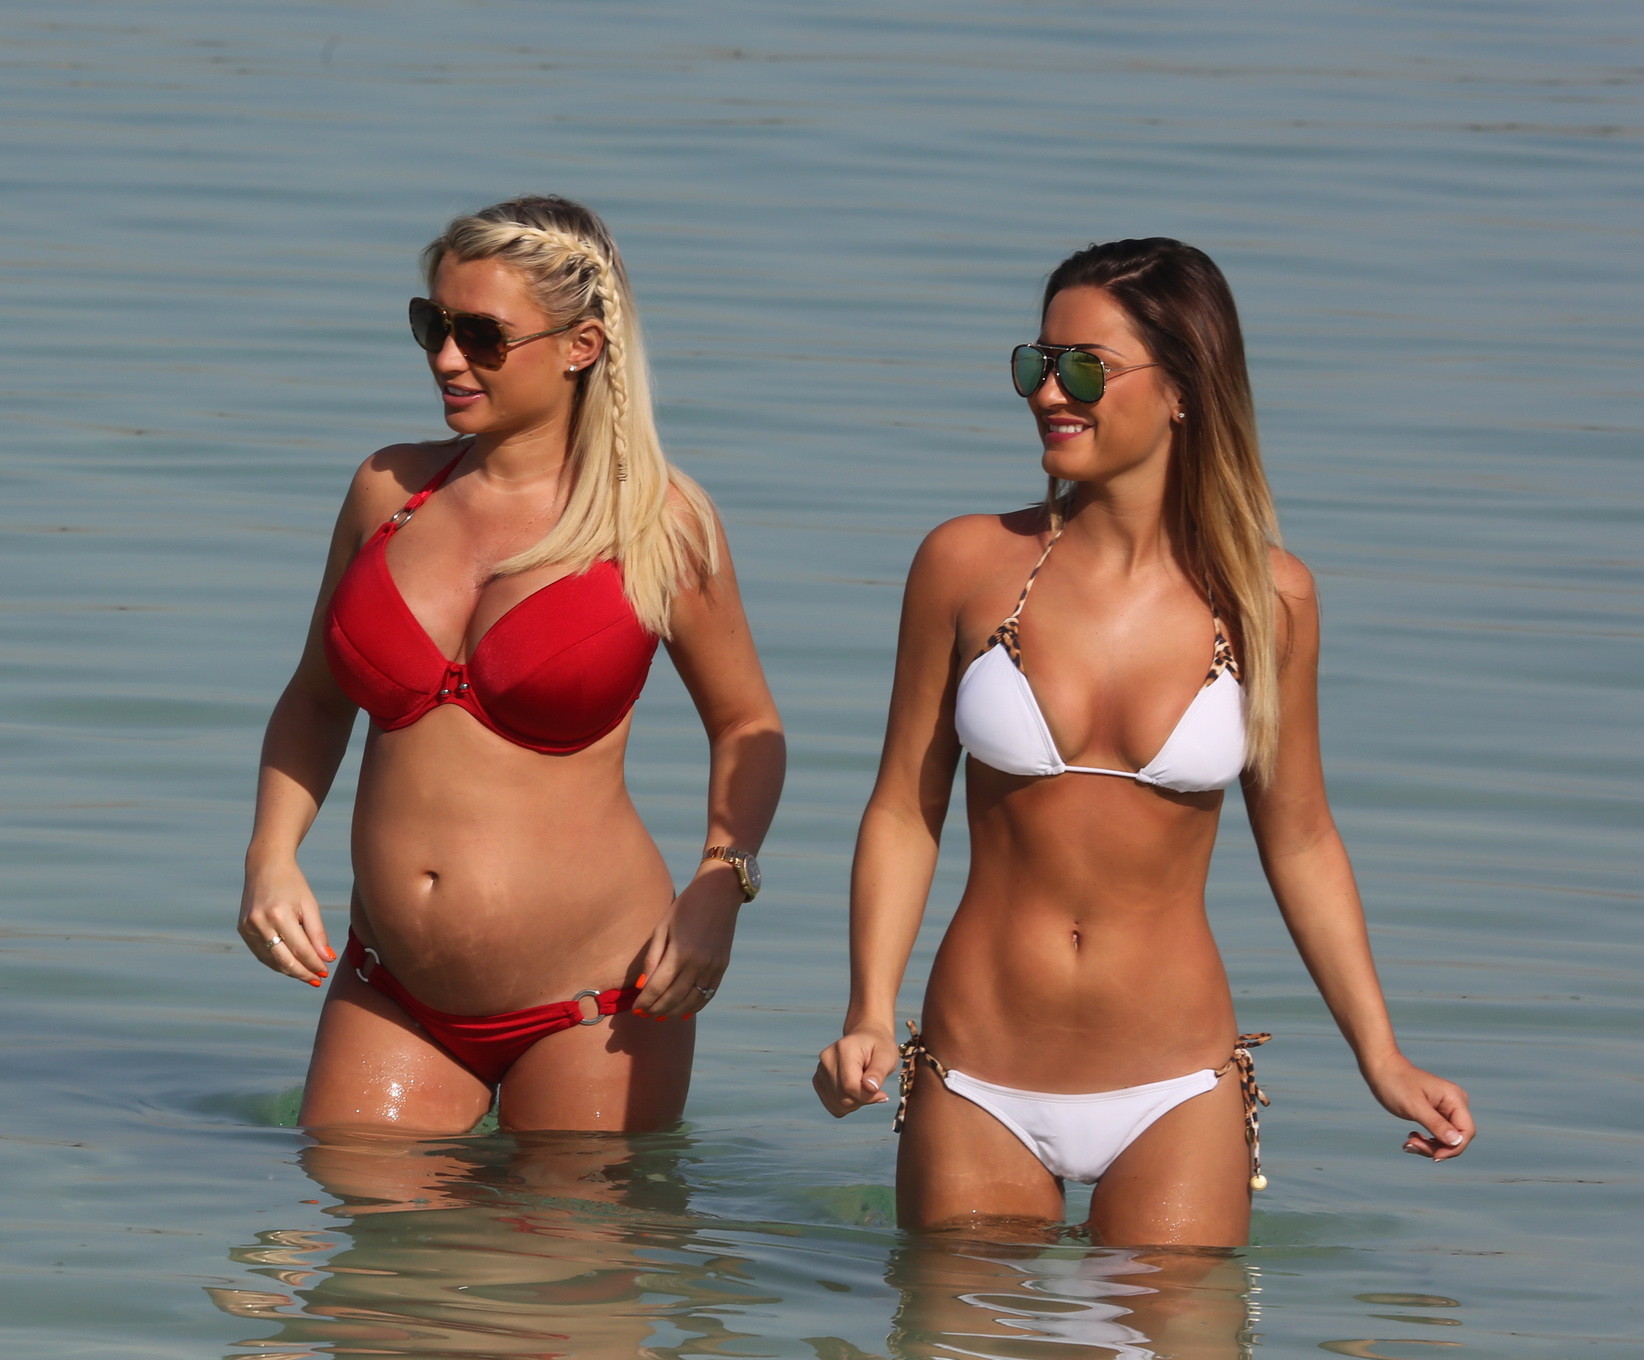 Sam e billie Faiers indossano bikini striminziti in spiaggia durante una vacanza in uae
 #75197538